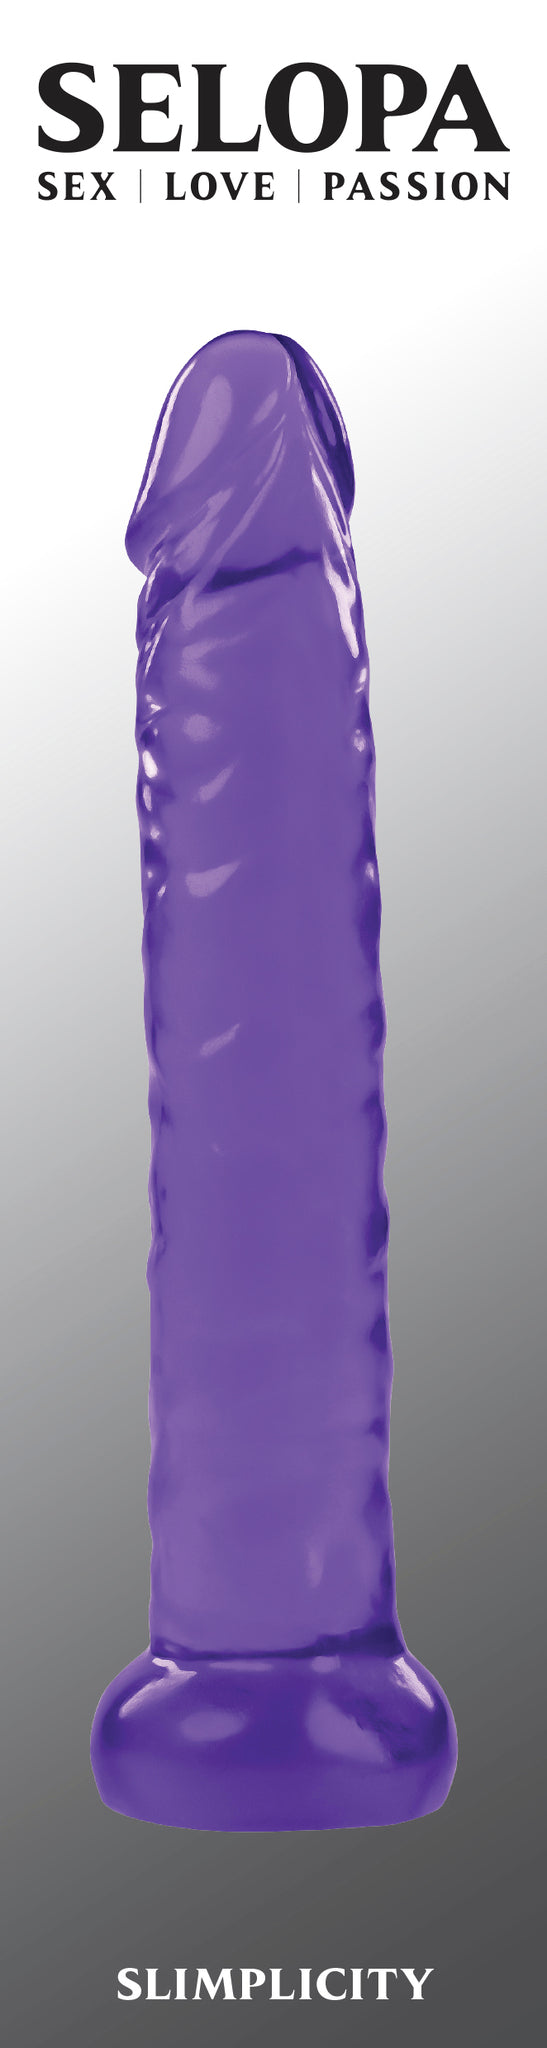 Selopa Slimplicity Purple Realistic Dildo